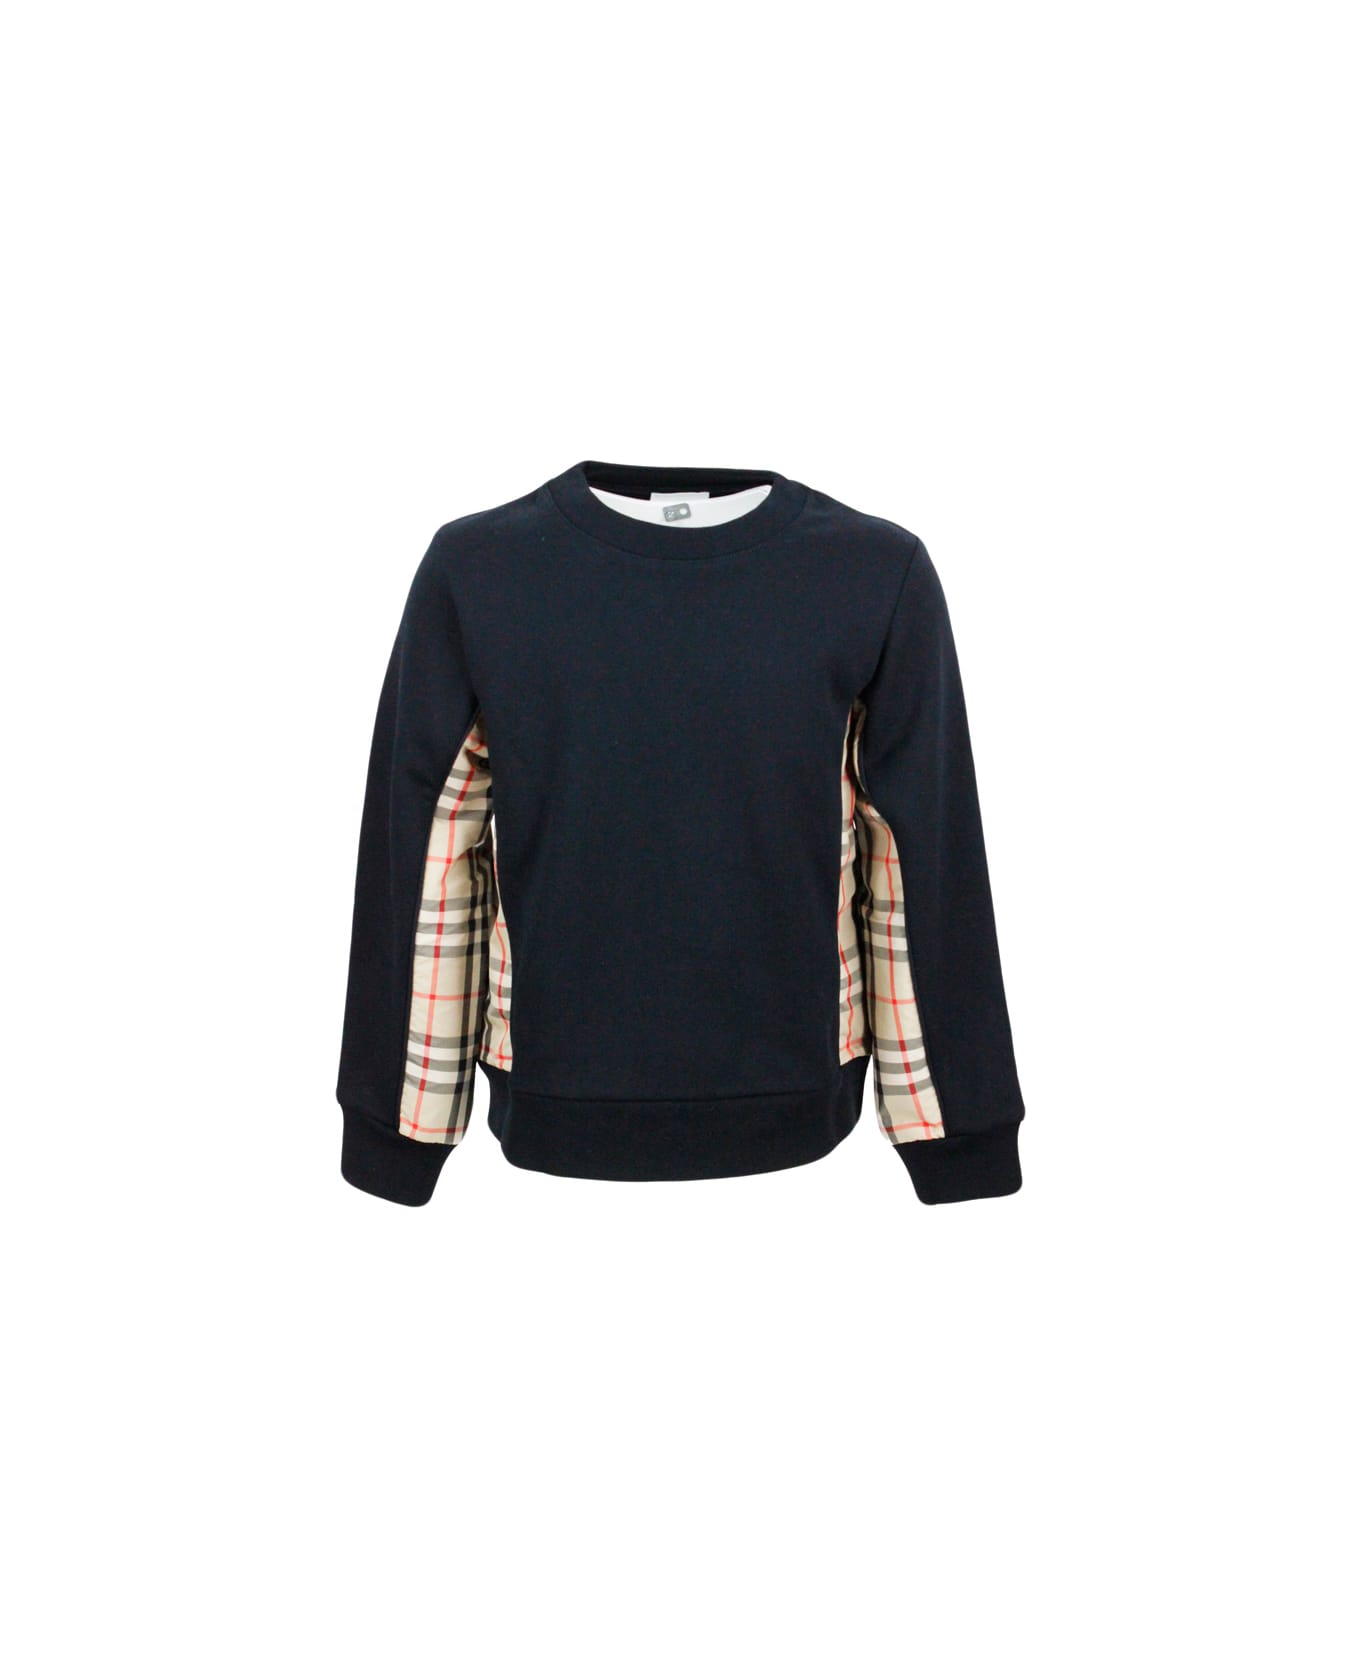 Burberry Crewneck Sweatshirt In Cotton And Check On The Sides. - Black ニットウェア＆スウェットシャツ